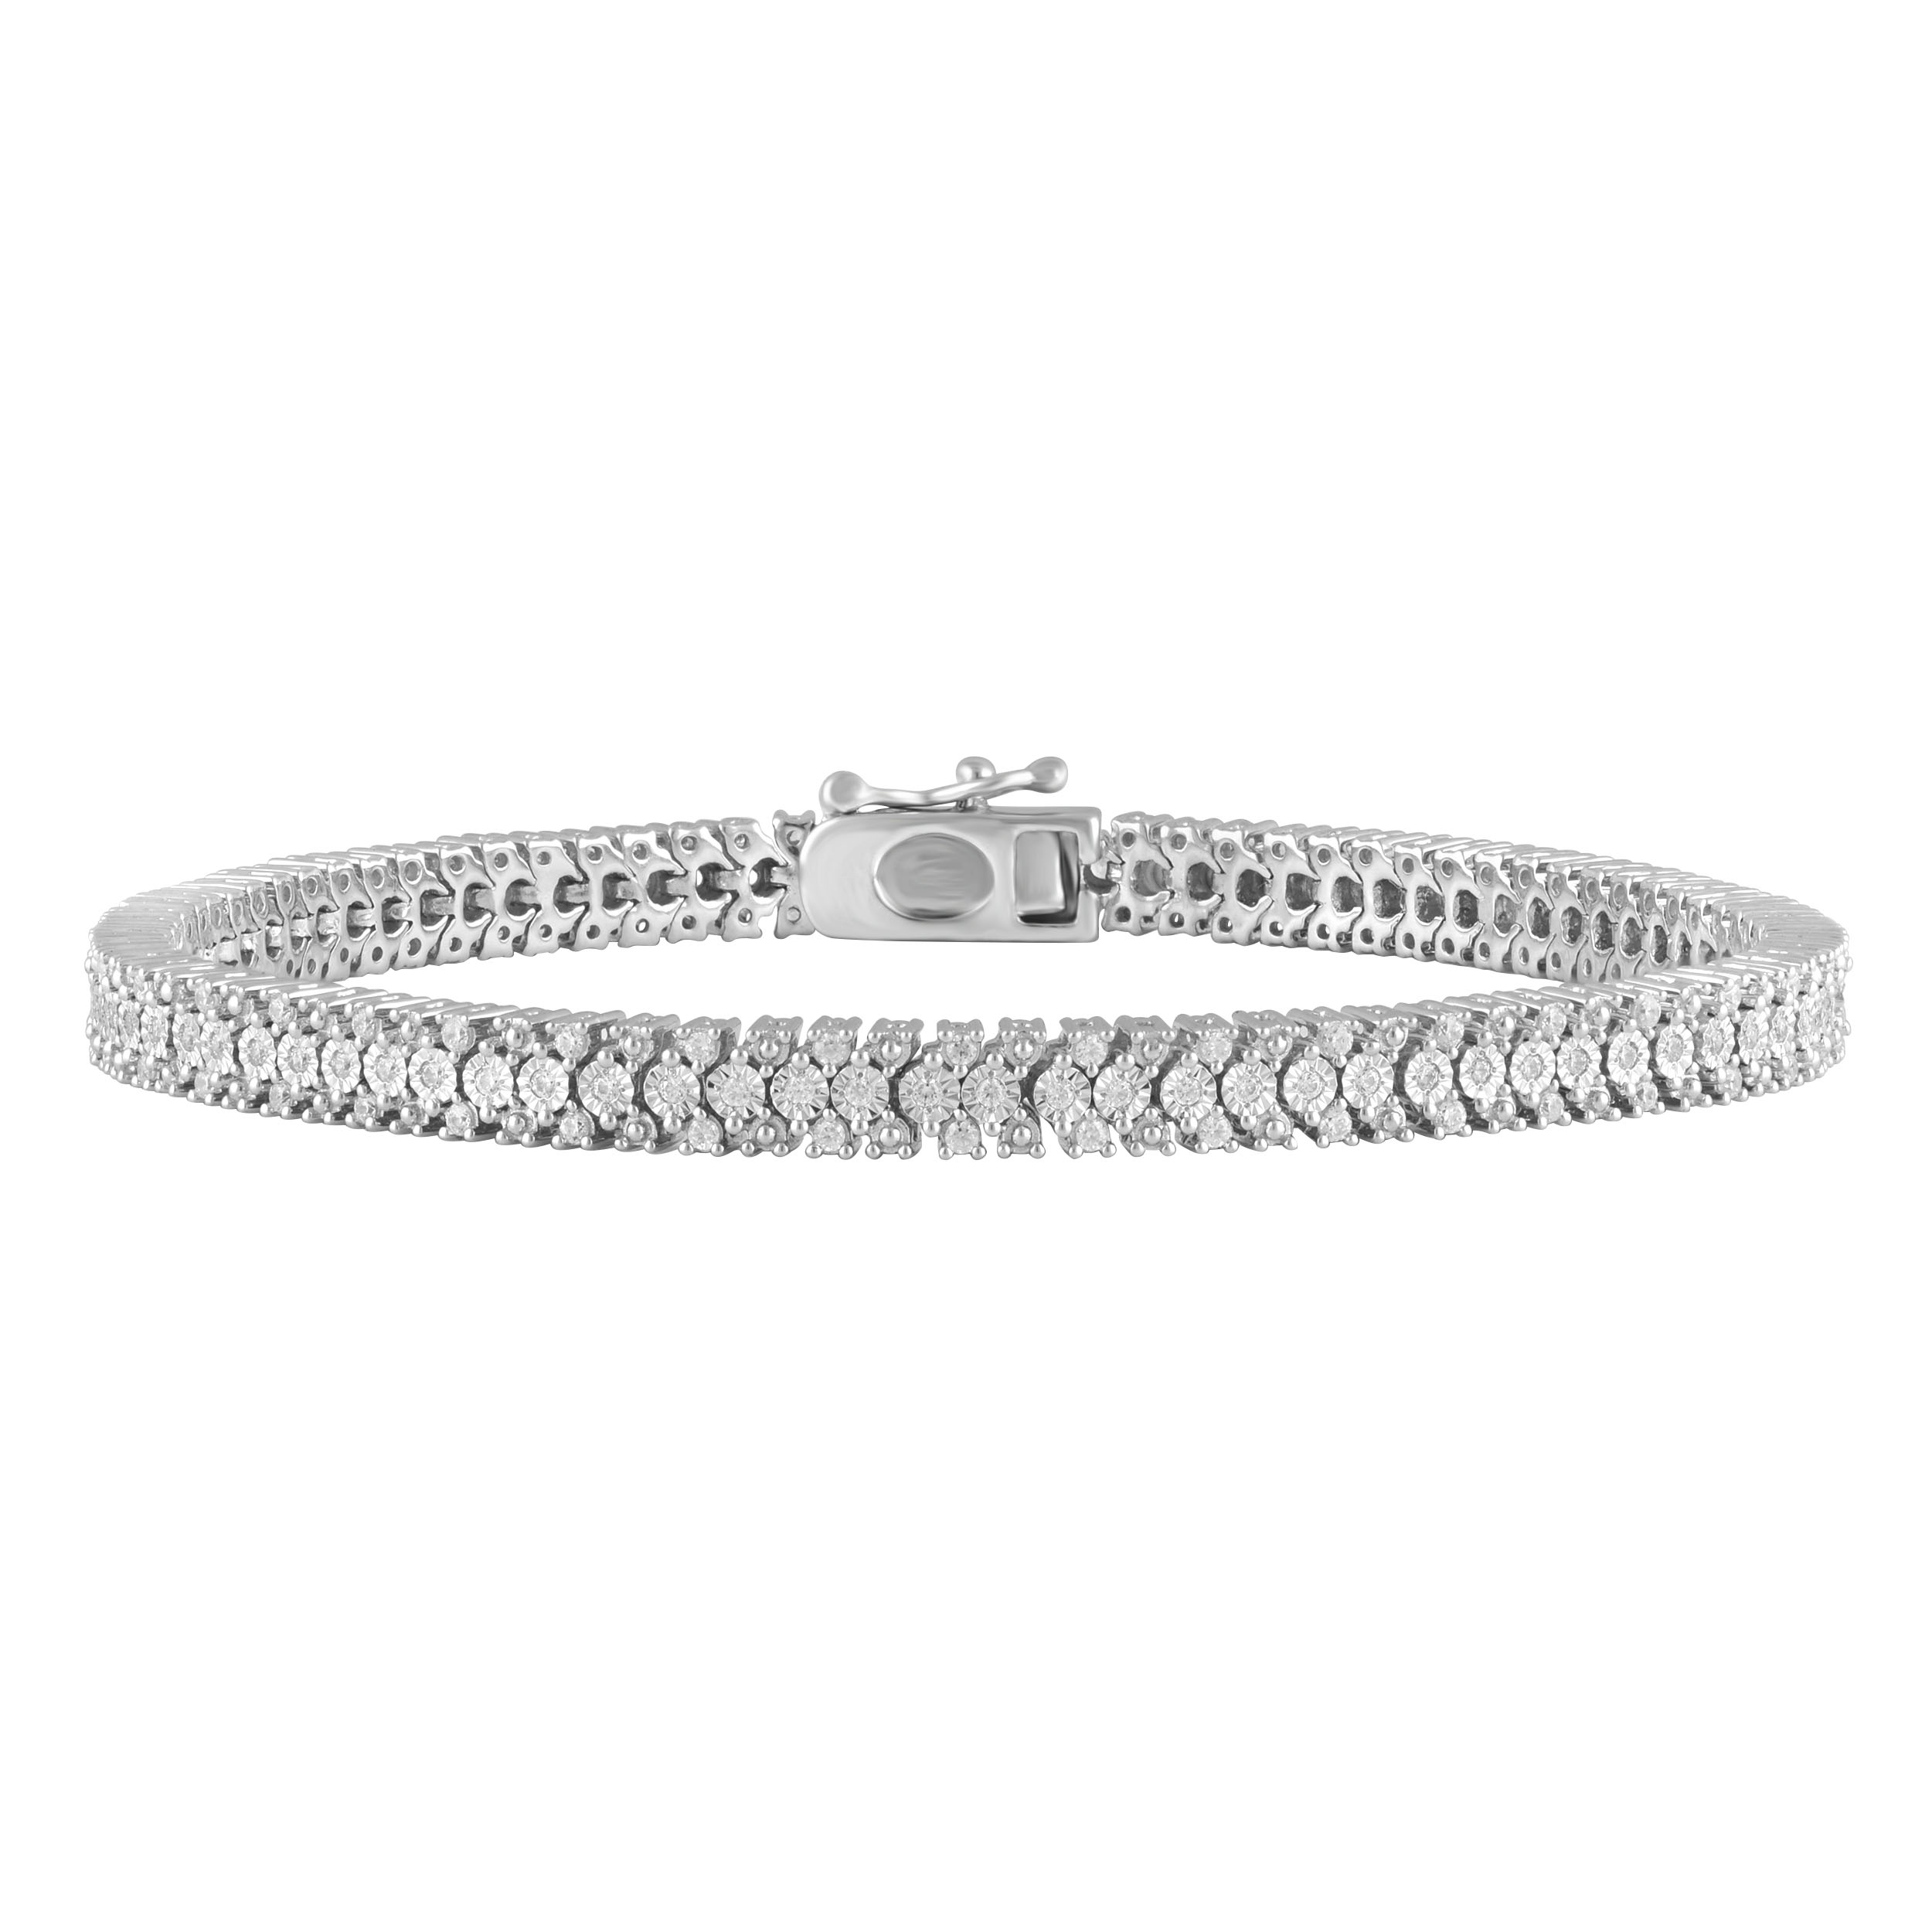 Sterling Silver 1 Carat Diamond Bracelet with 167 Brilliant Cut Diamonds 18cm